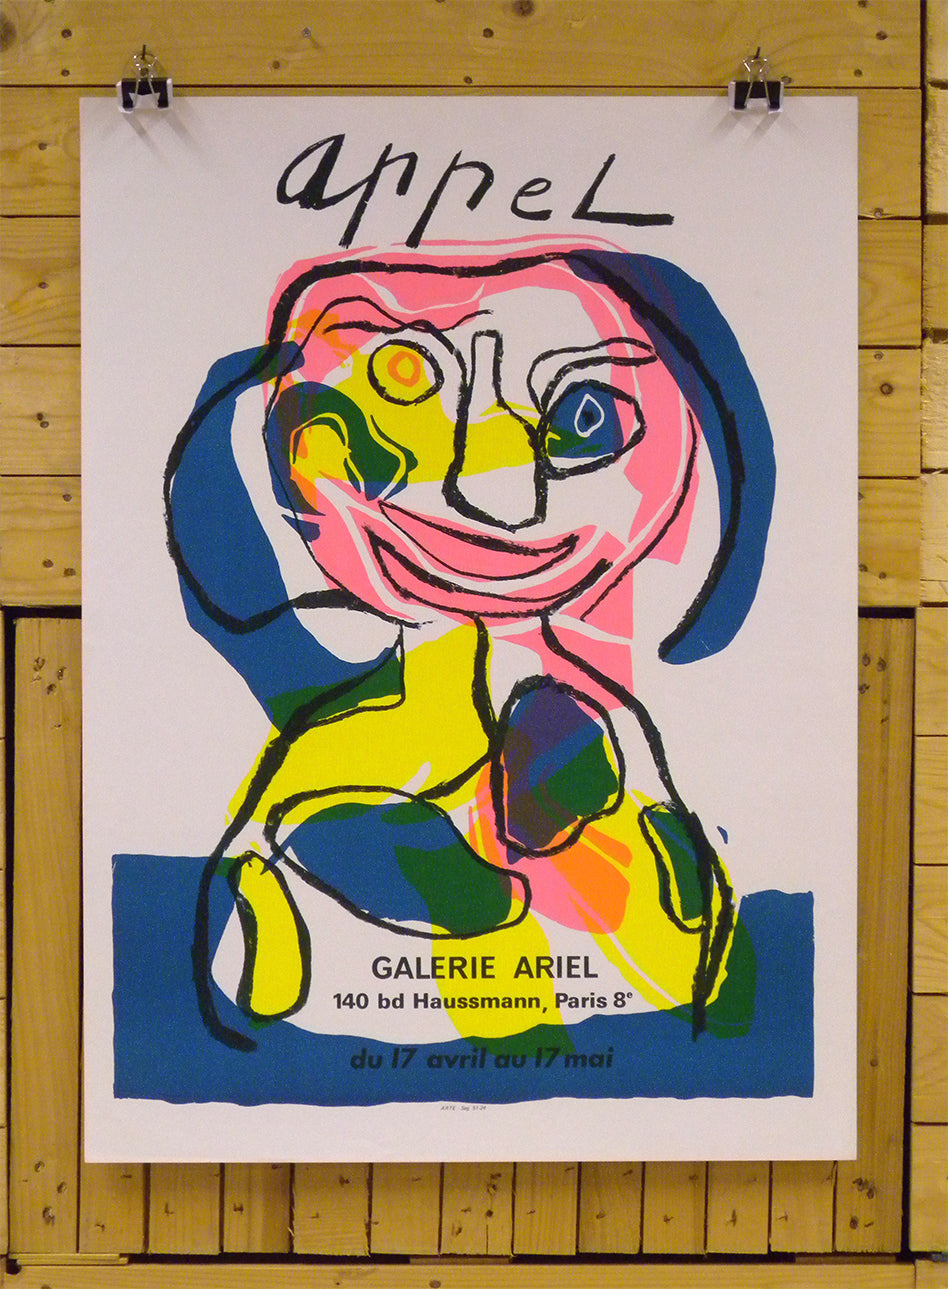 Appel — Galerie Ariel 1971